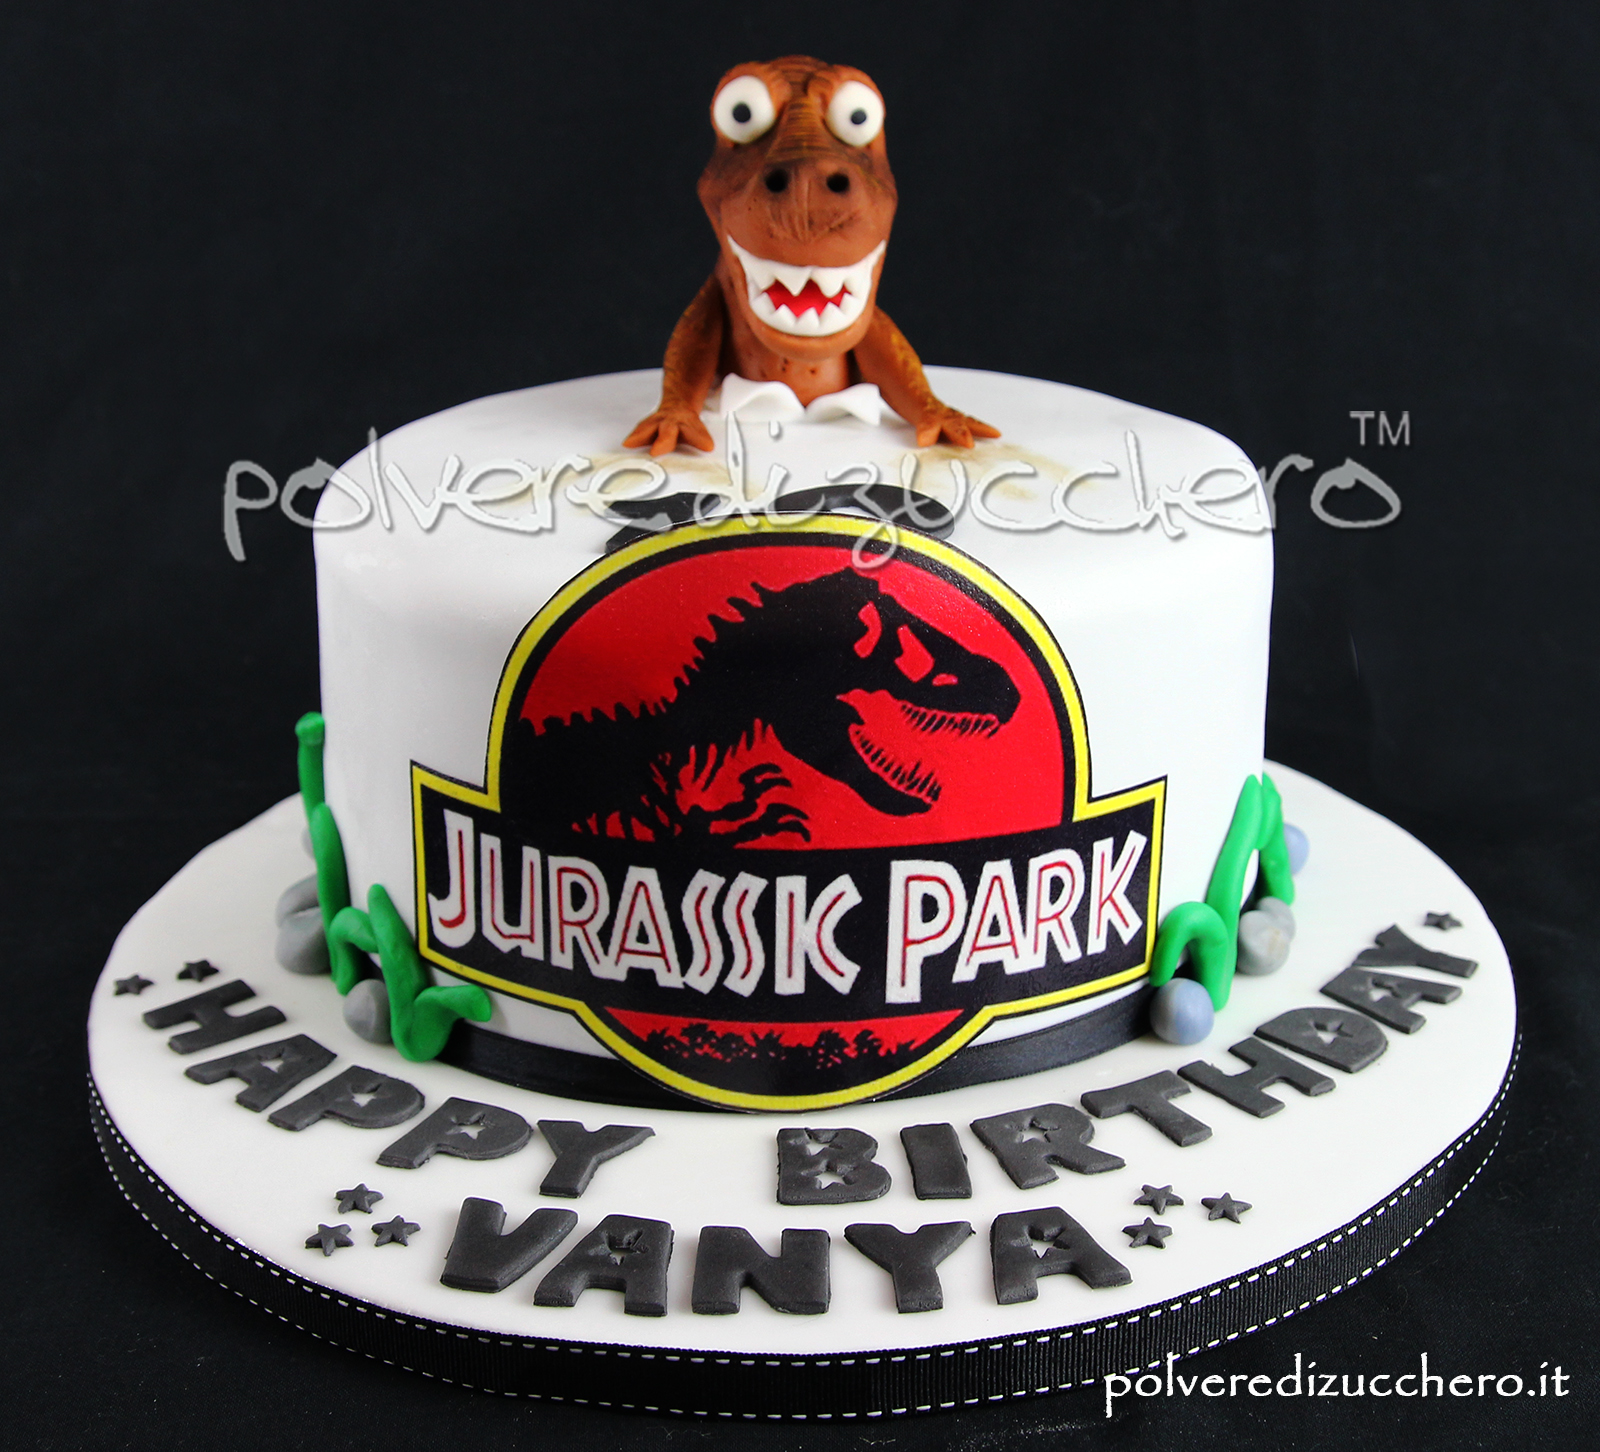 cake design pasta di zucchero polvere di zucchero torta decorata jurassic park jurassic world dinosauro dinosaur fondant compleanno bday